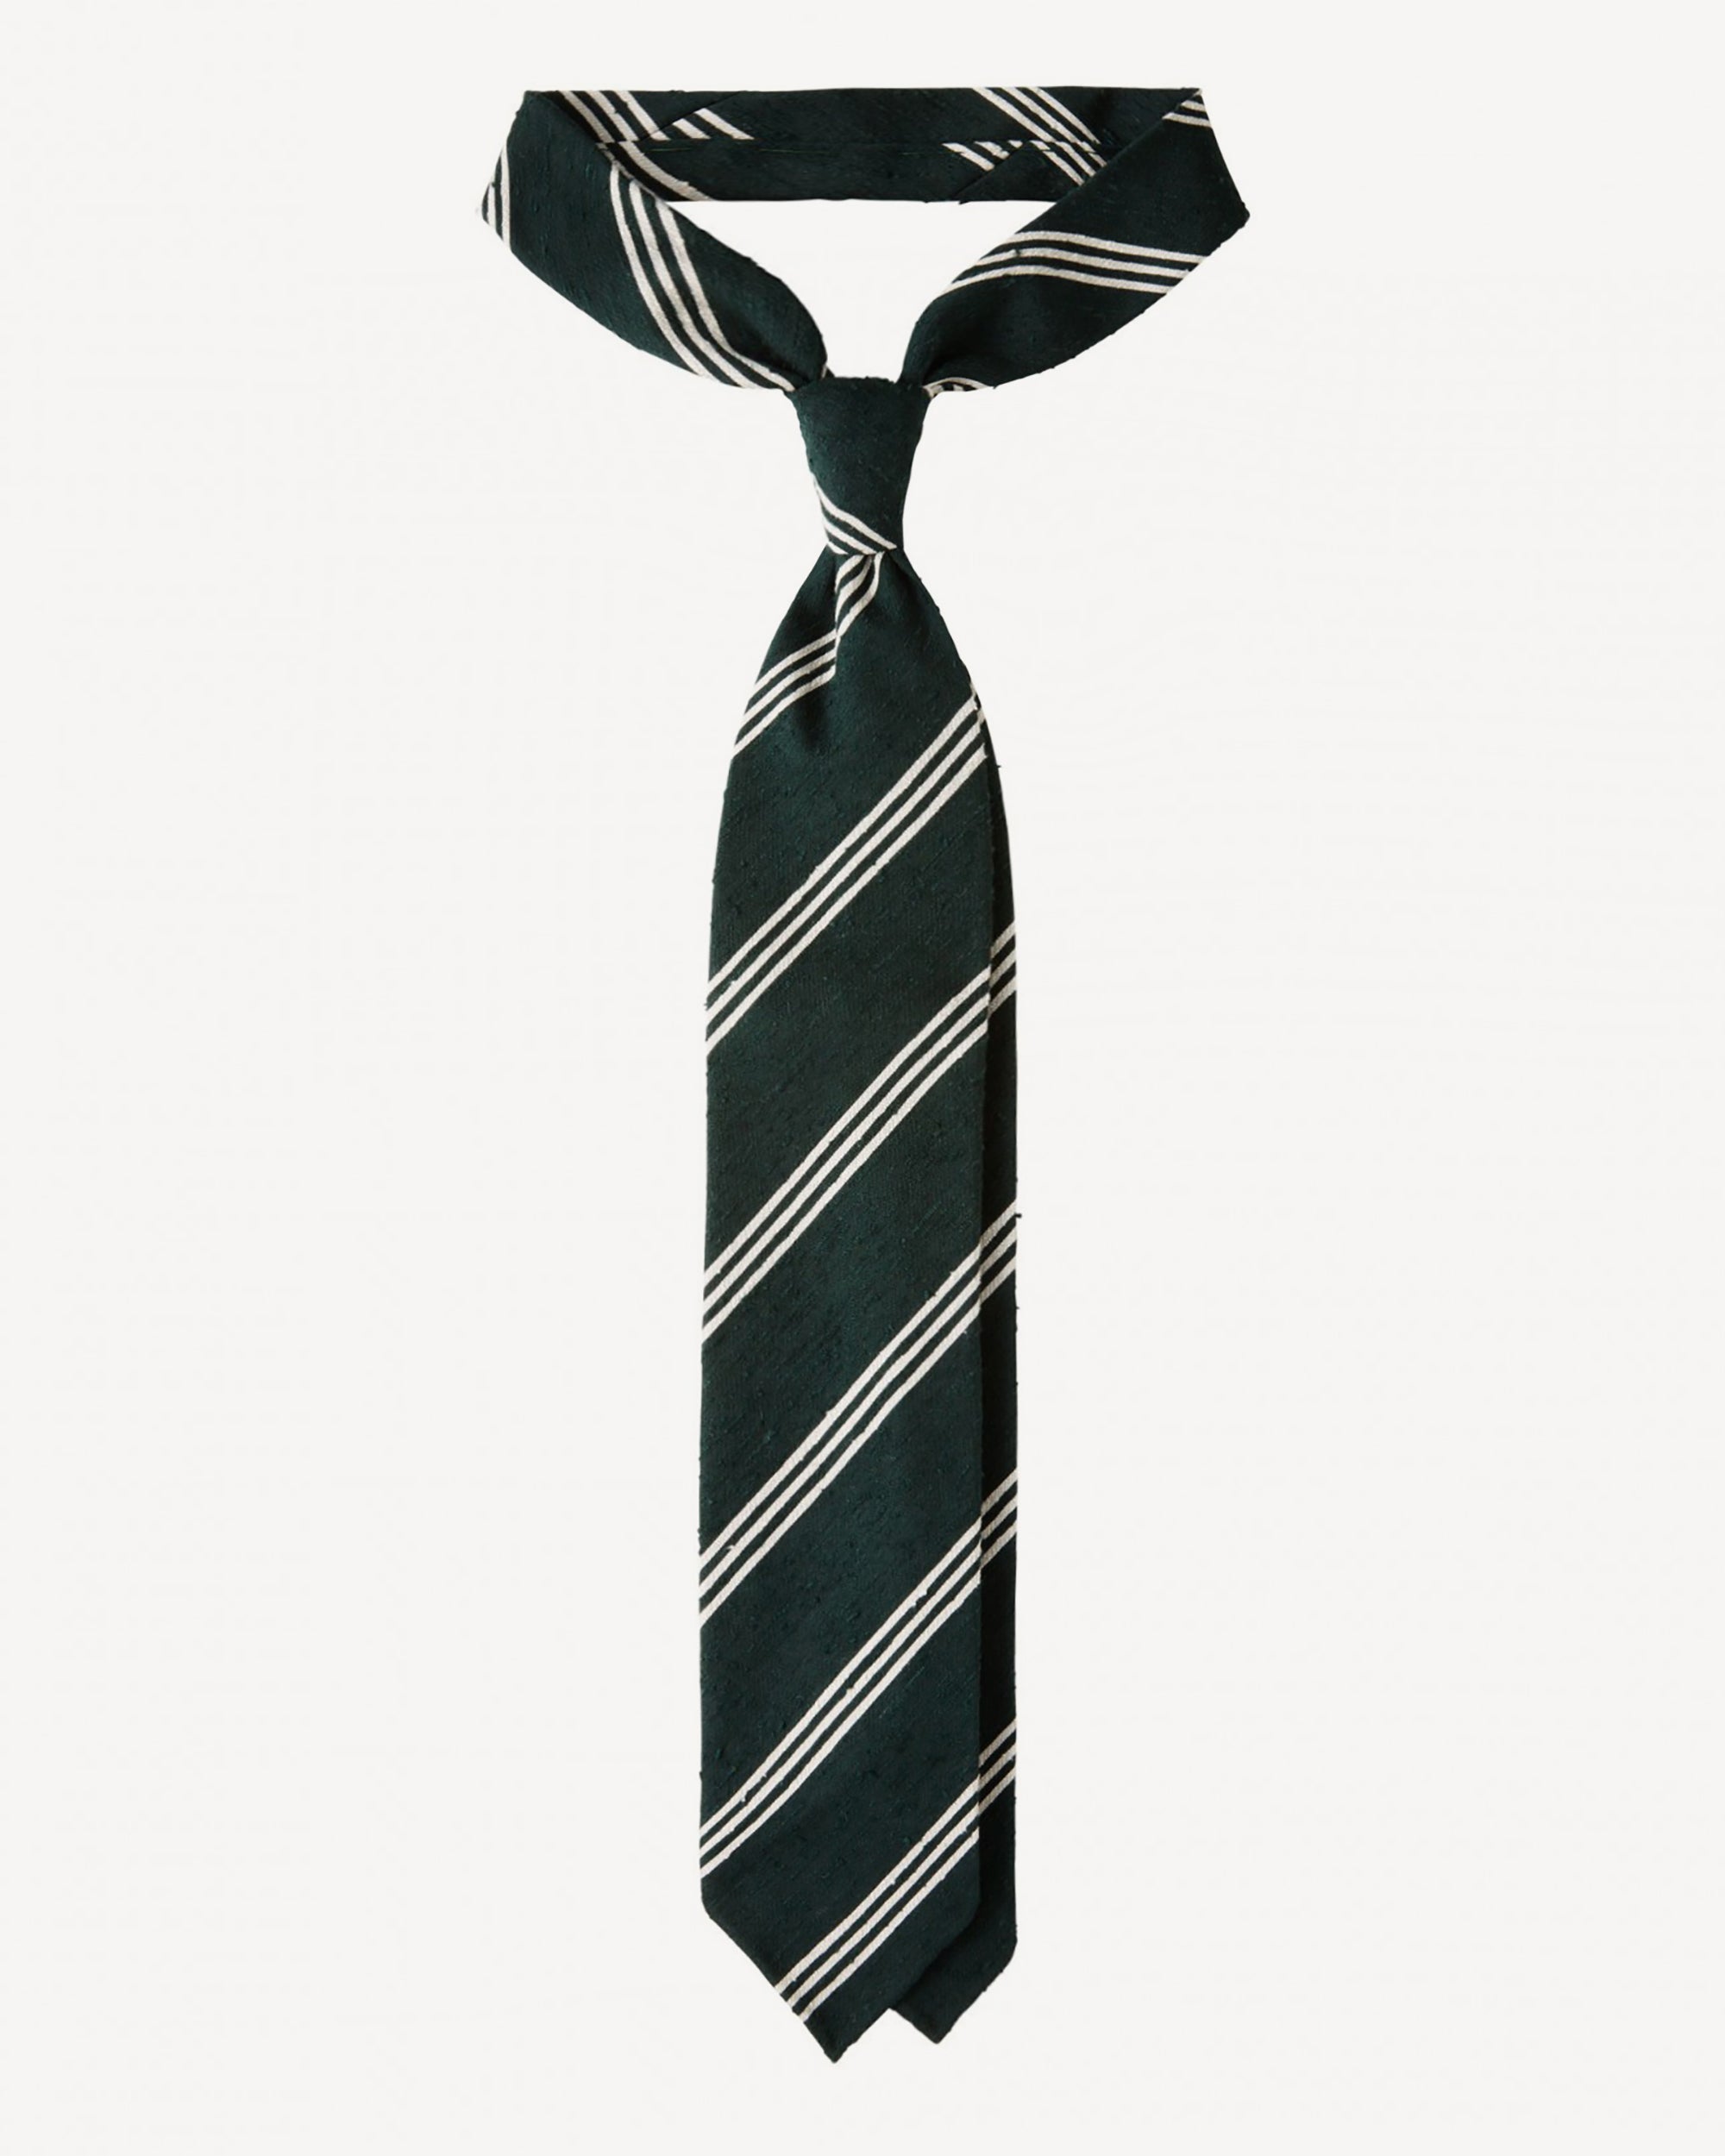 Krawatte in grün weiss gestreift